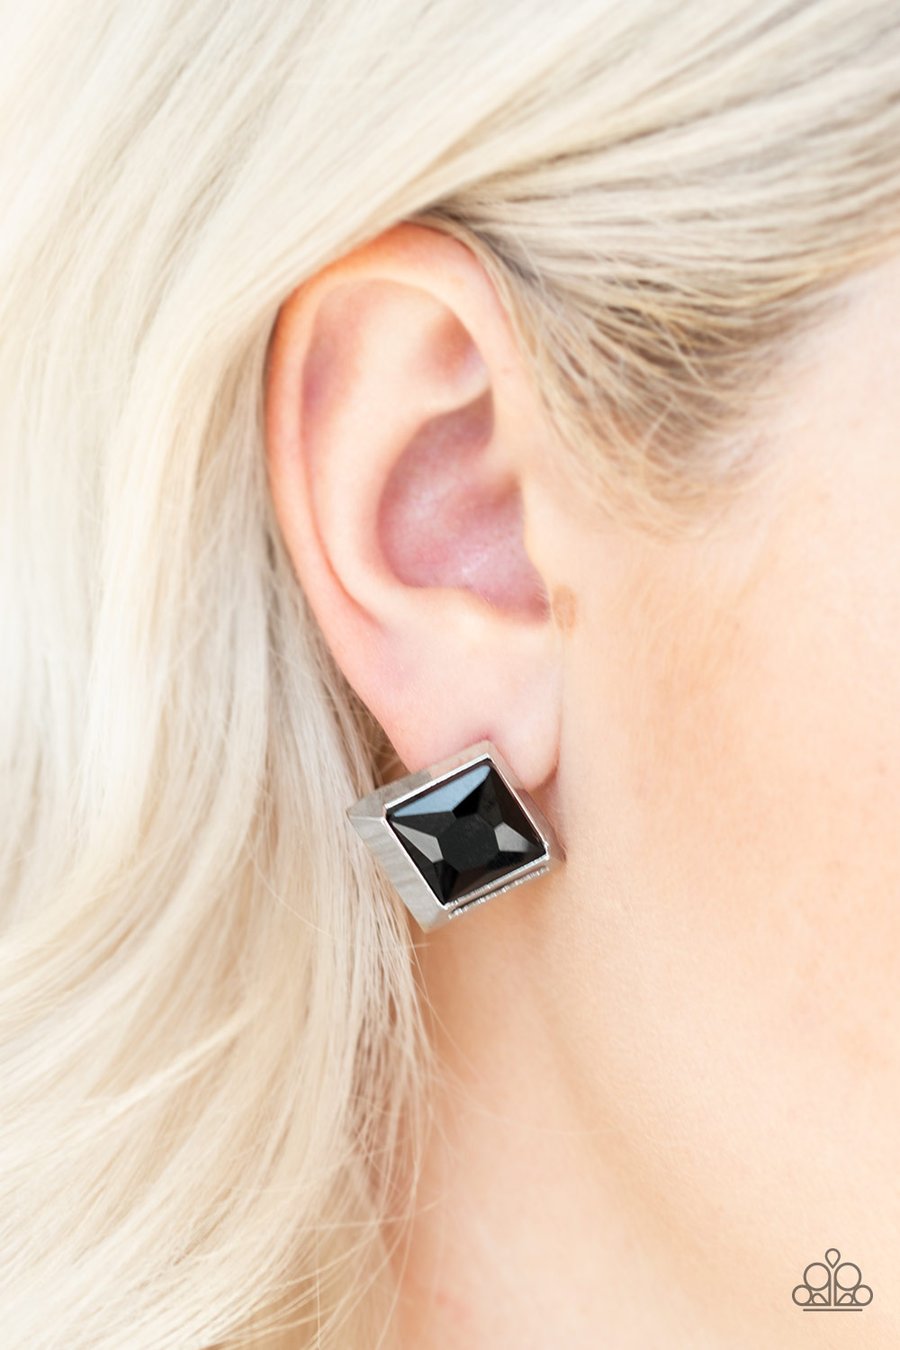 Stellar Square - black - Paparazzi earrings - $5 Jewelry with Ashley Swint